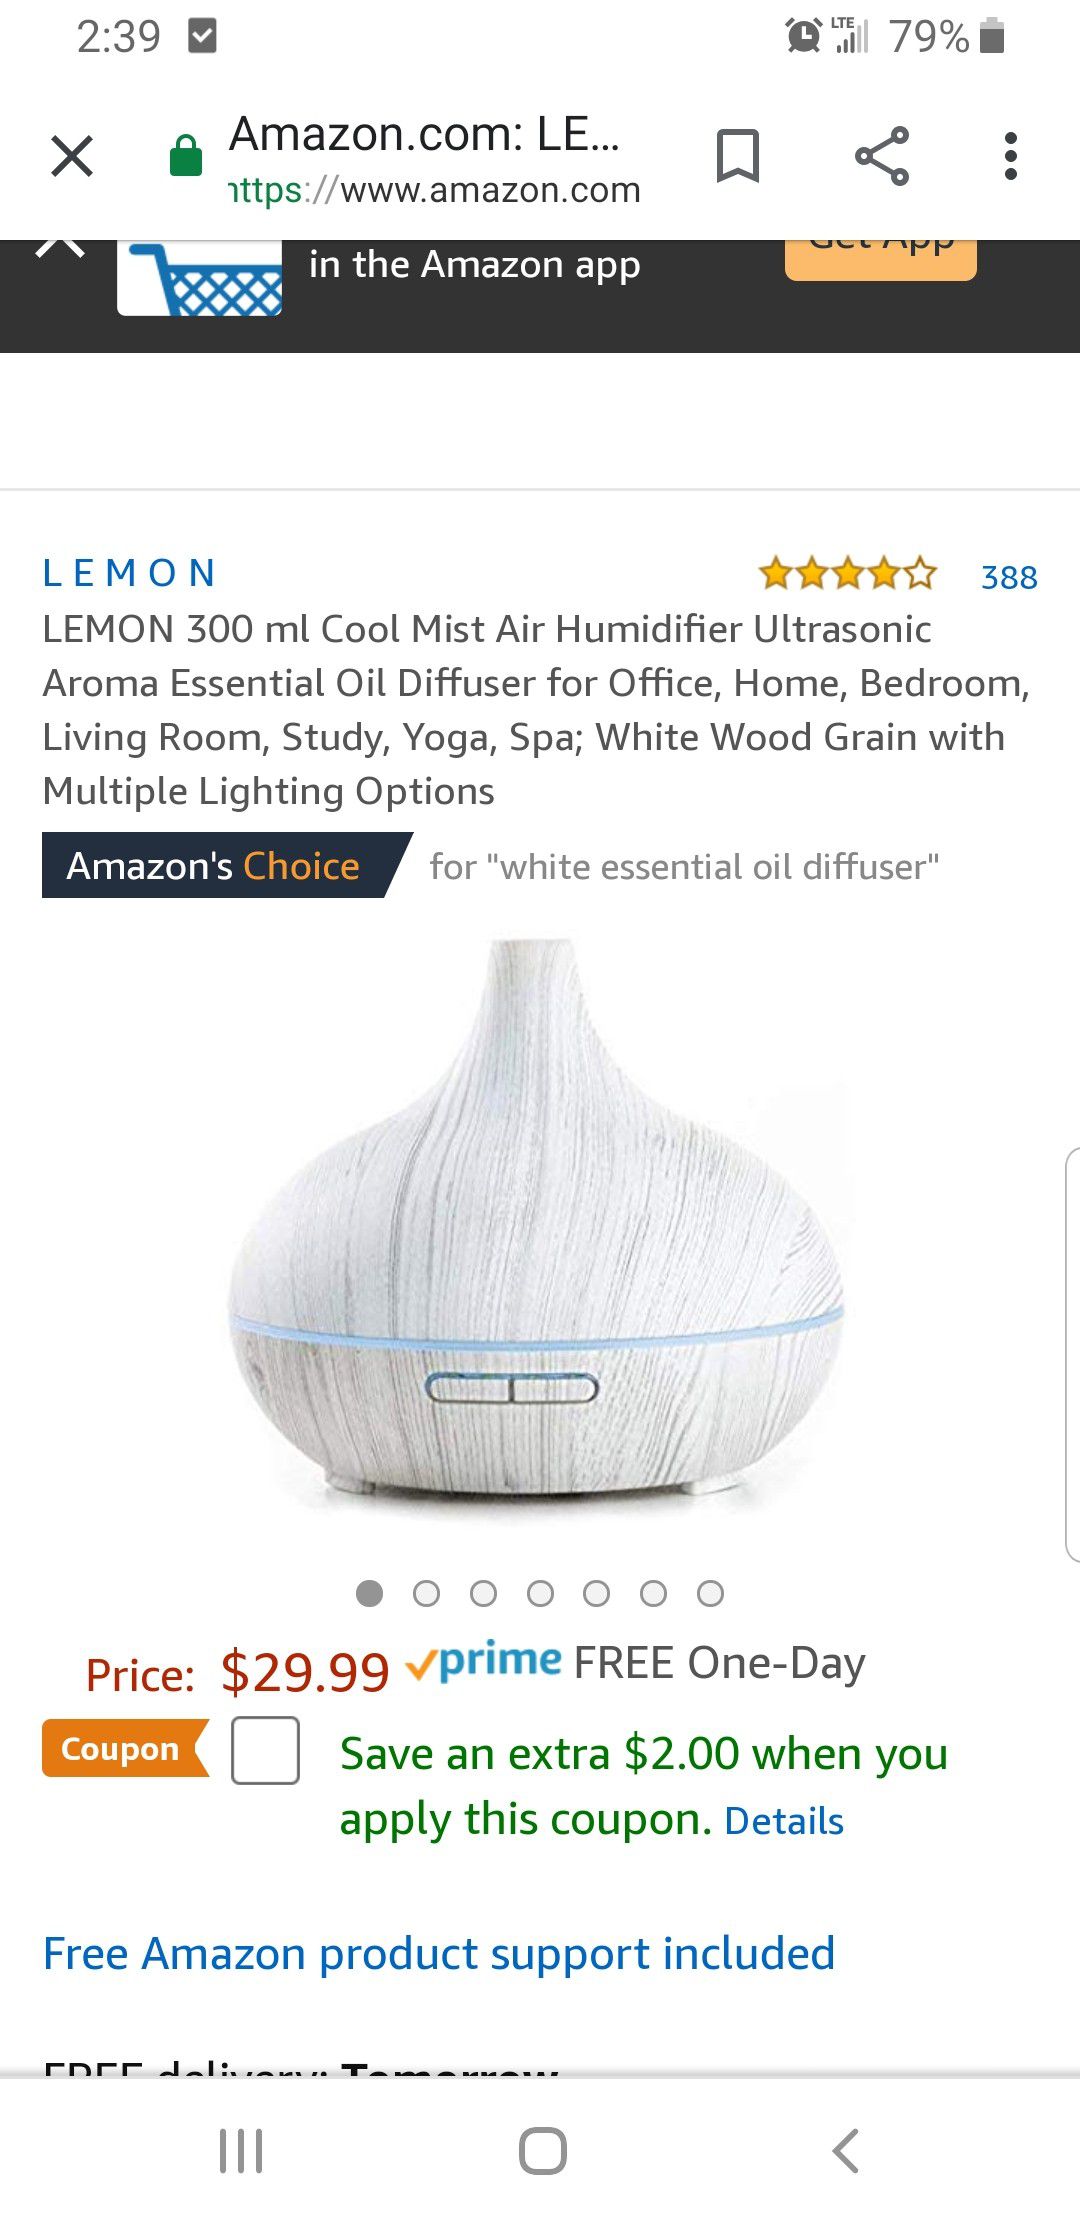 Lemon cool mist diffuser/humidifier